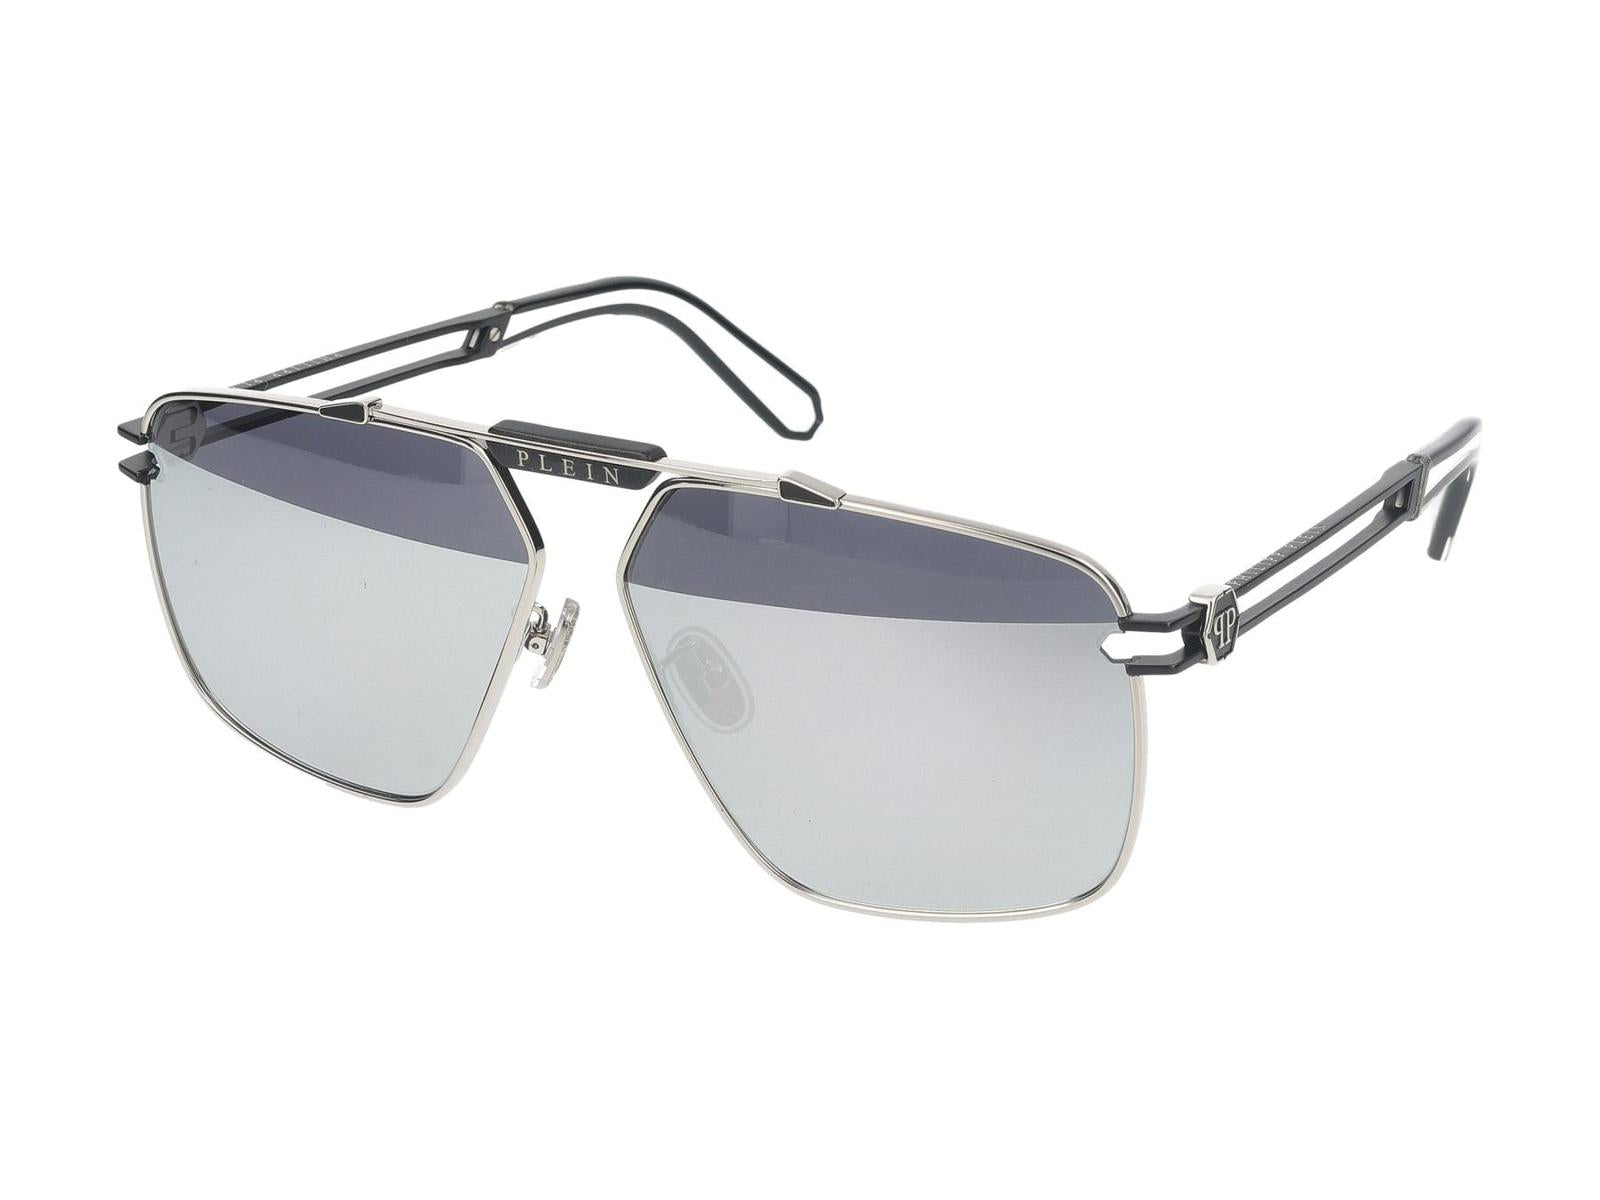 Shop Philipp Plein Sunglasses In Palladium Polished W/parts Black Semi-glossy